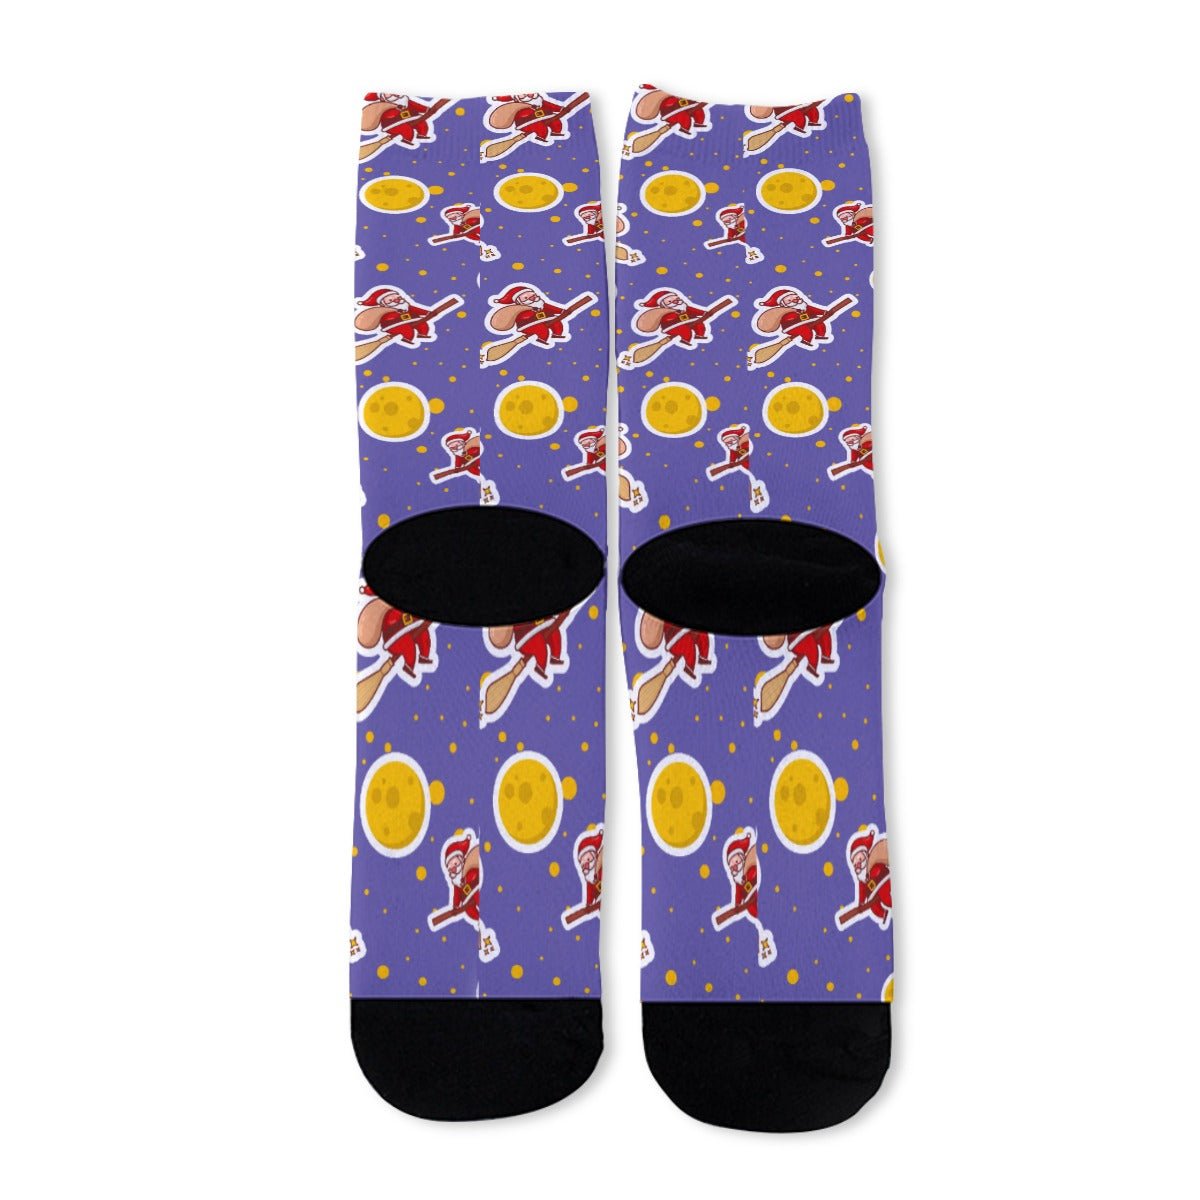 Unisex Long Socks - Santa Witch - Festive Style